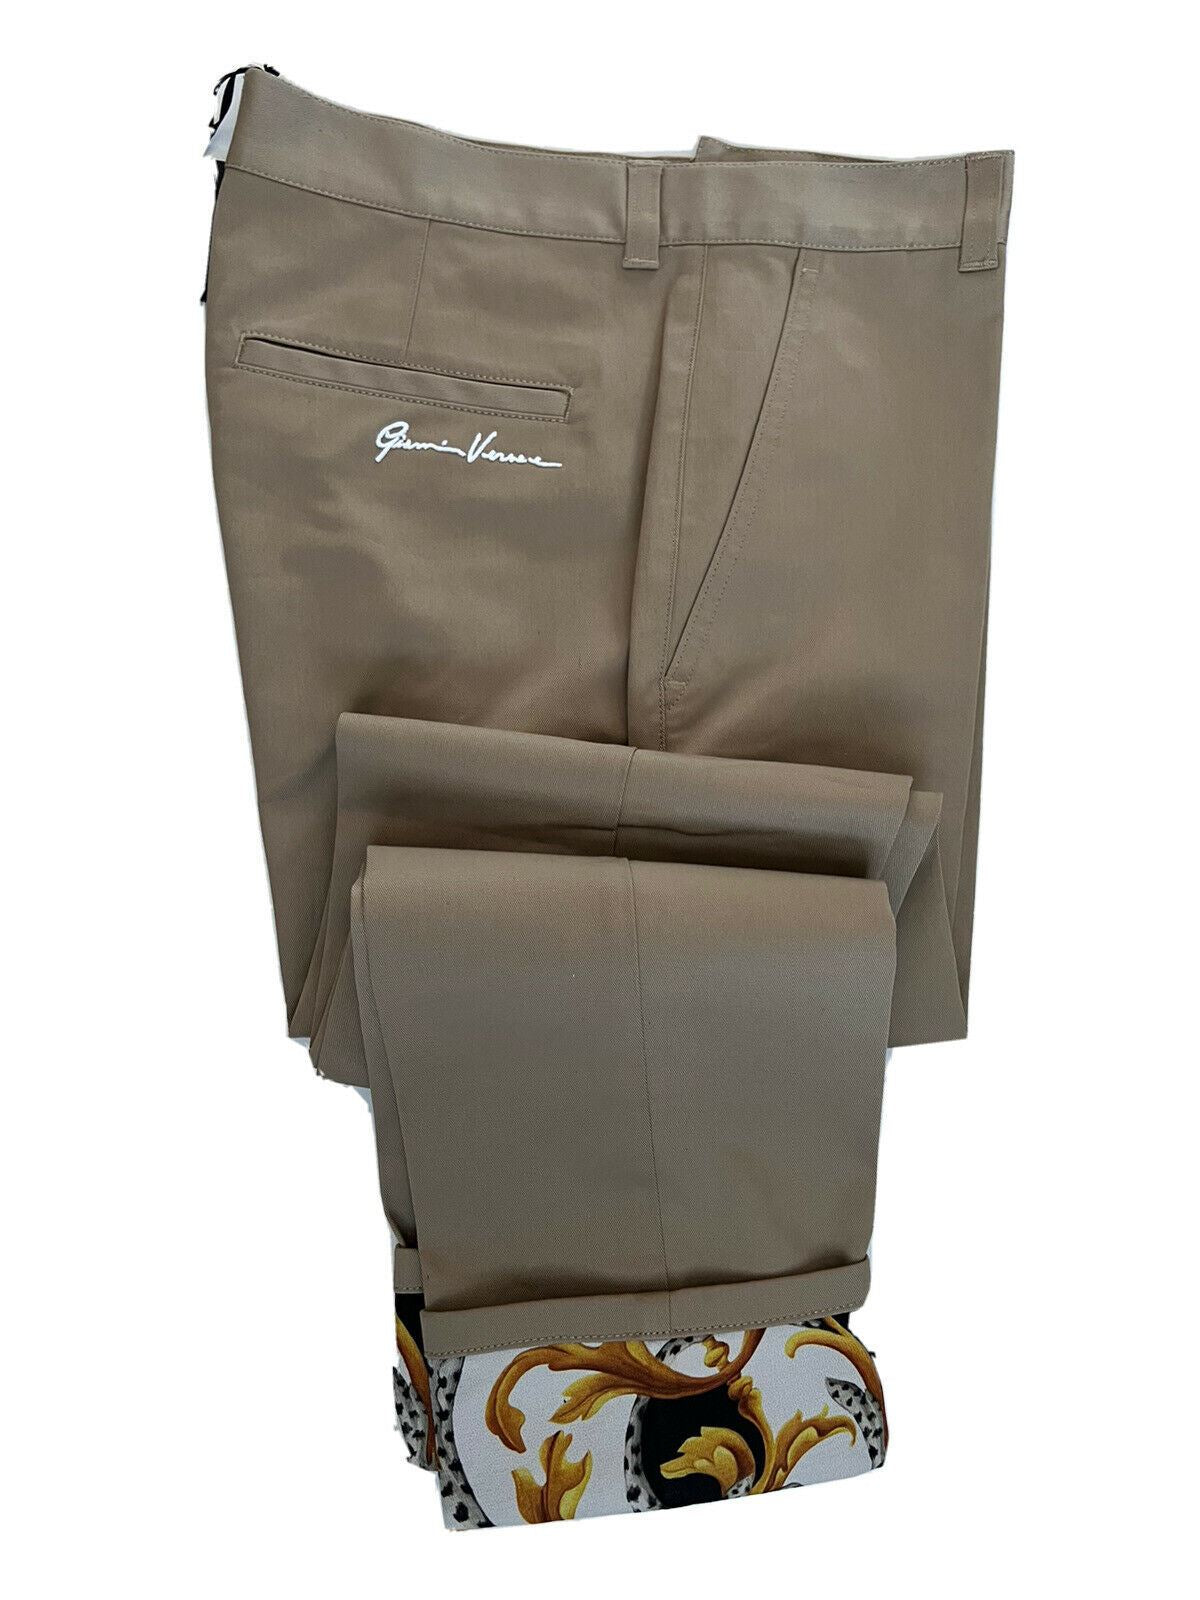 Мужские коричневые брюки Versace Palazzo NWT 595 долларов США 34 США (50 евро), производство Италия A87115